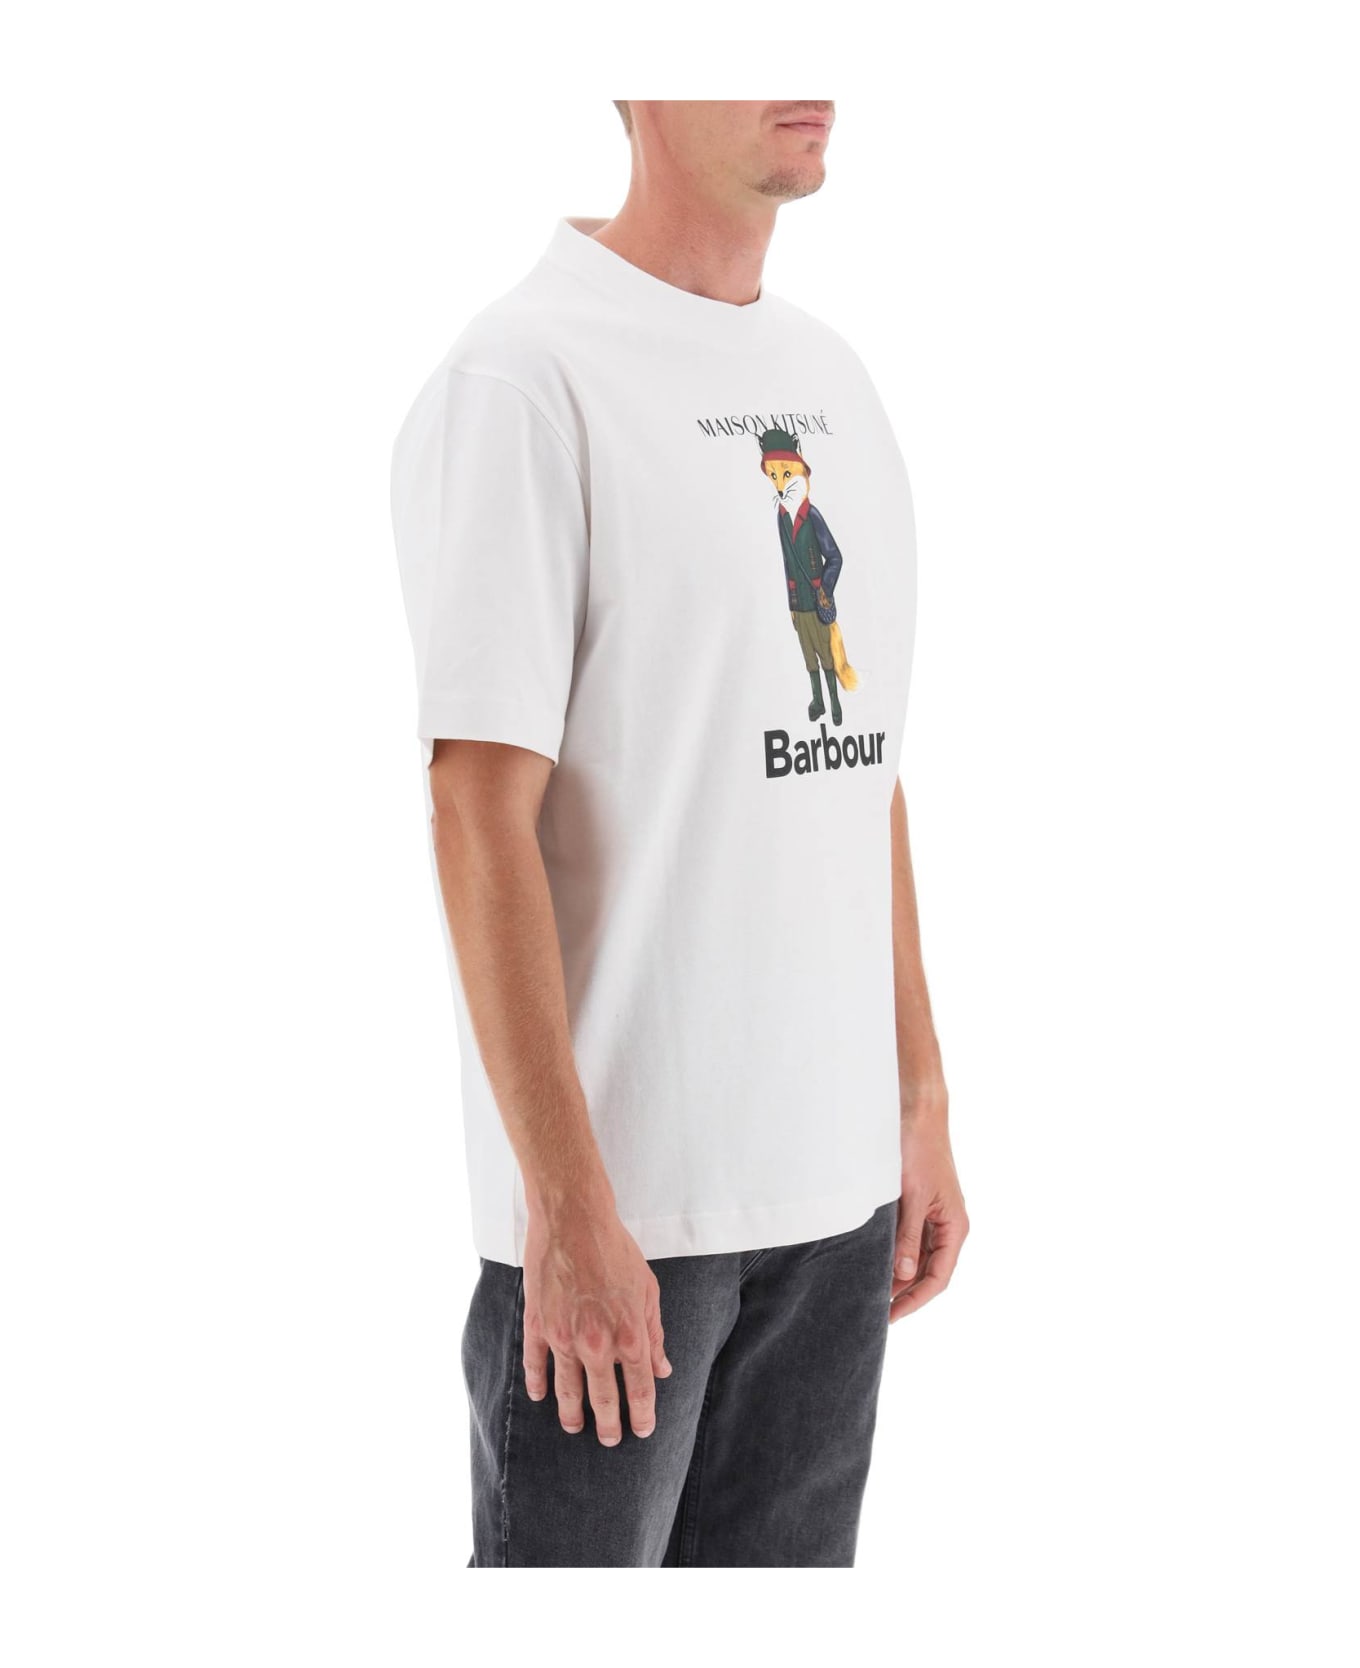 Barbour Maison Kitsuné Fox Beaufort Crew-neck T-shirt - WHITE (White)